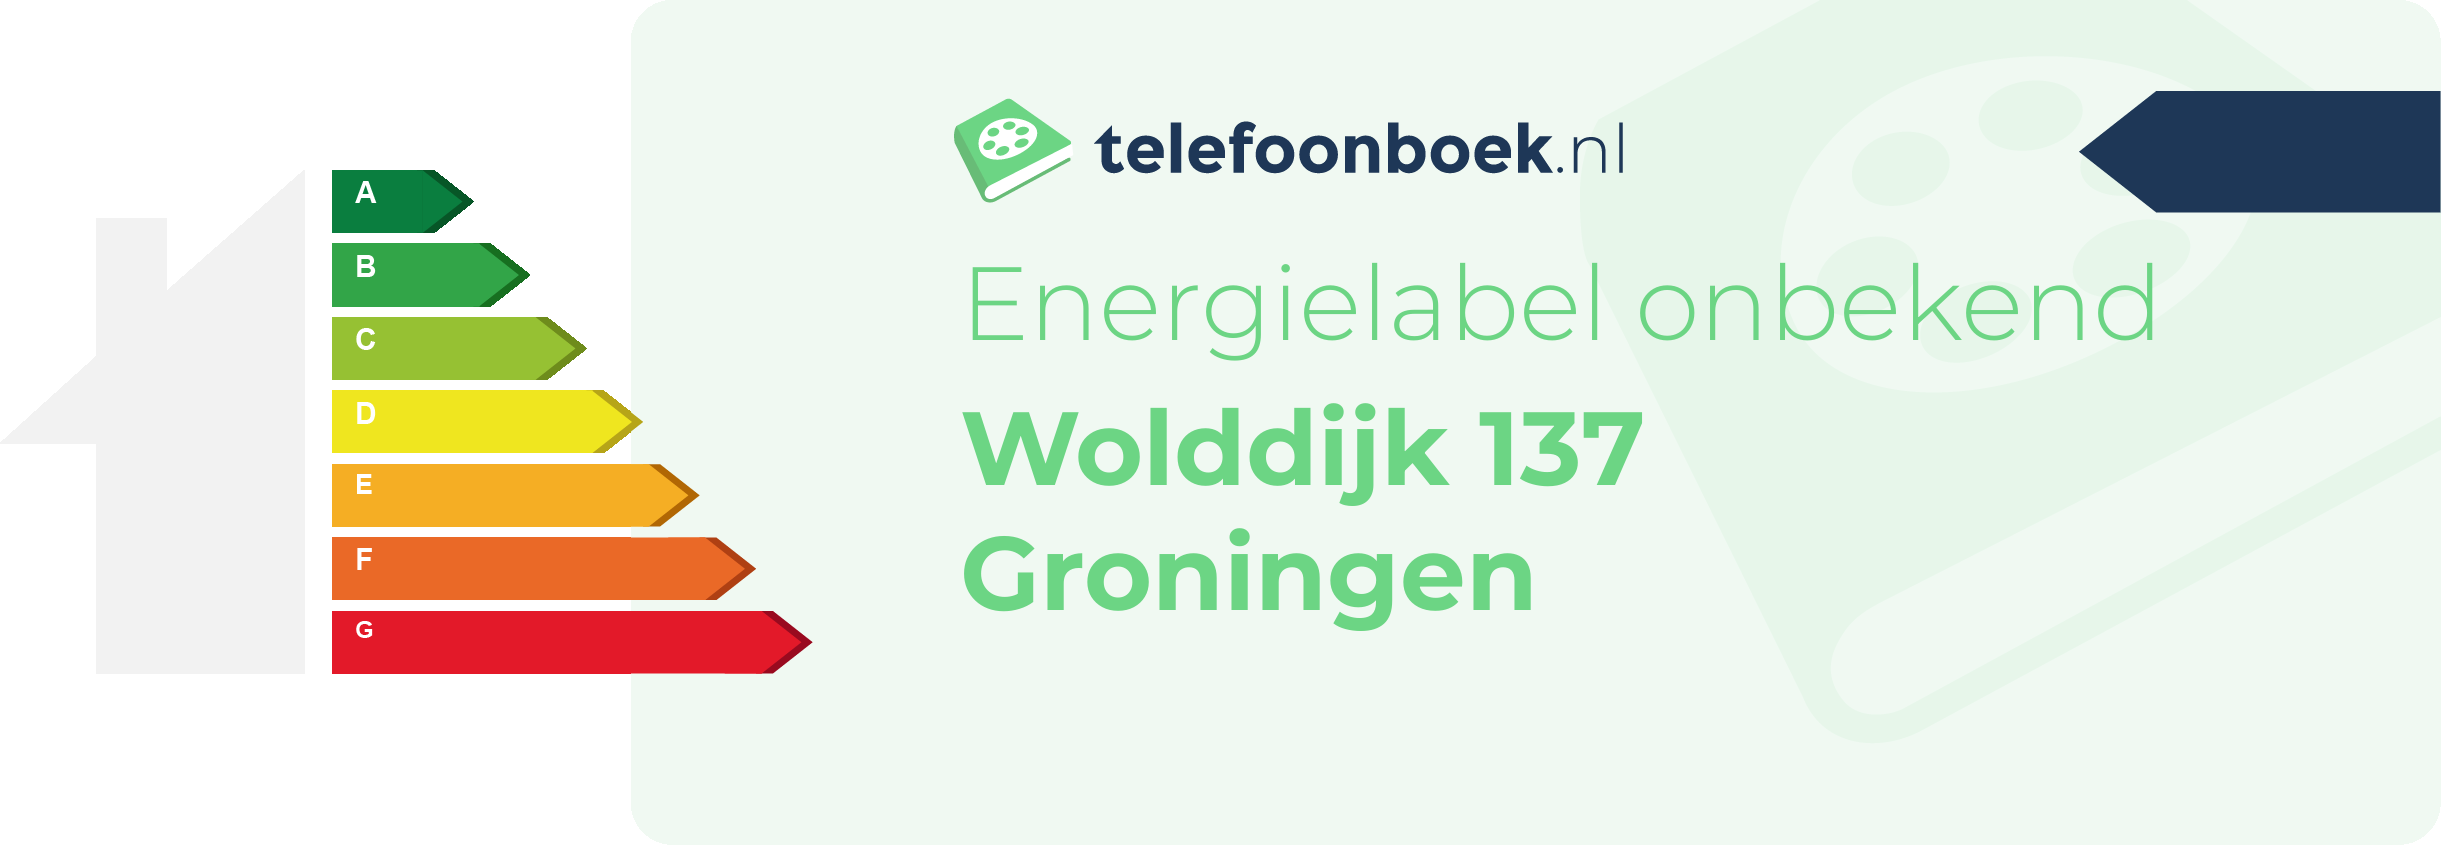 Energielabel Wolddijk 137 Groningen